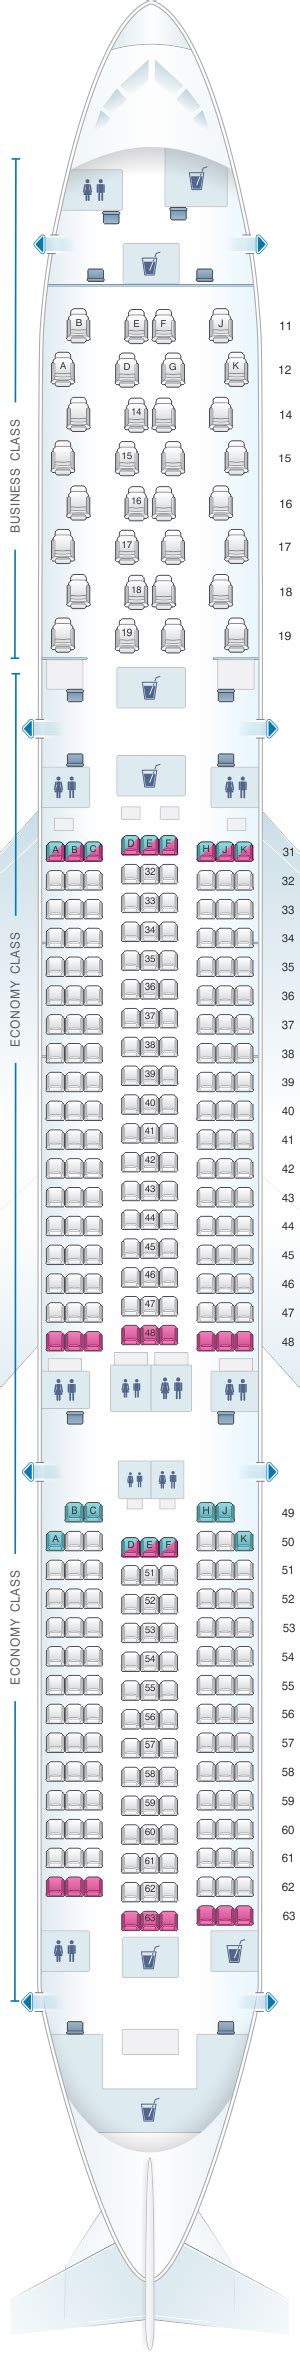 Sas Airbus A350 Seat Map My XXX Hot Girl